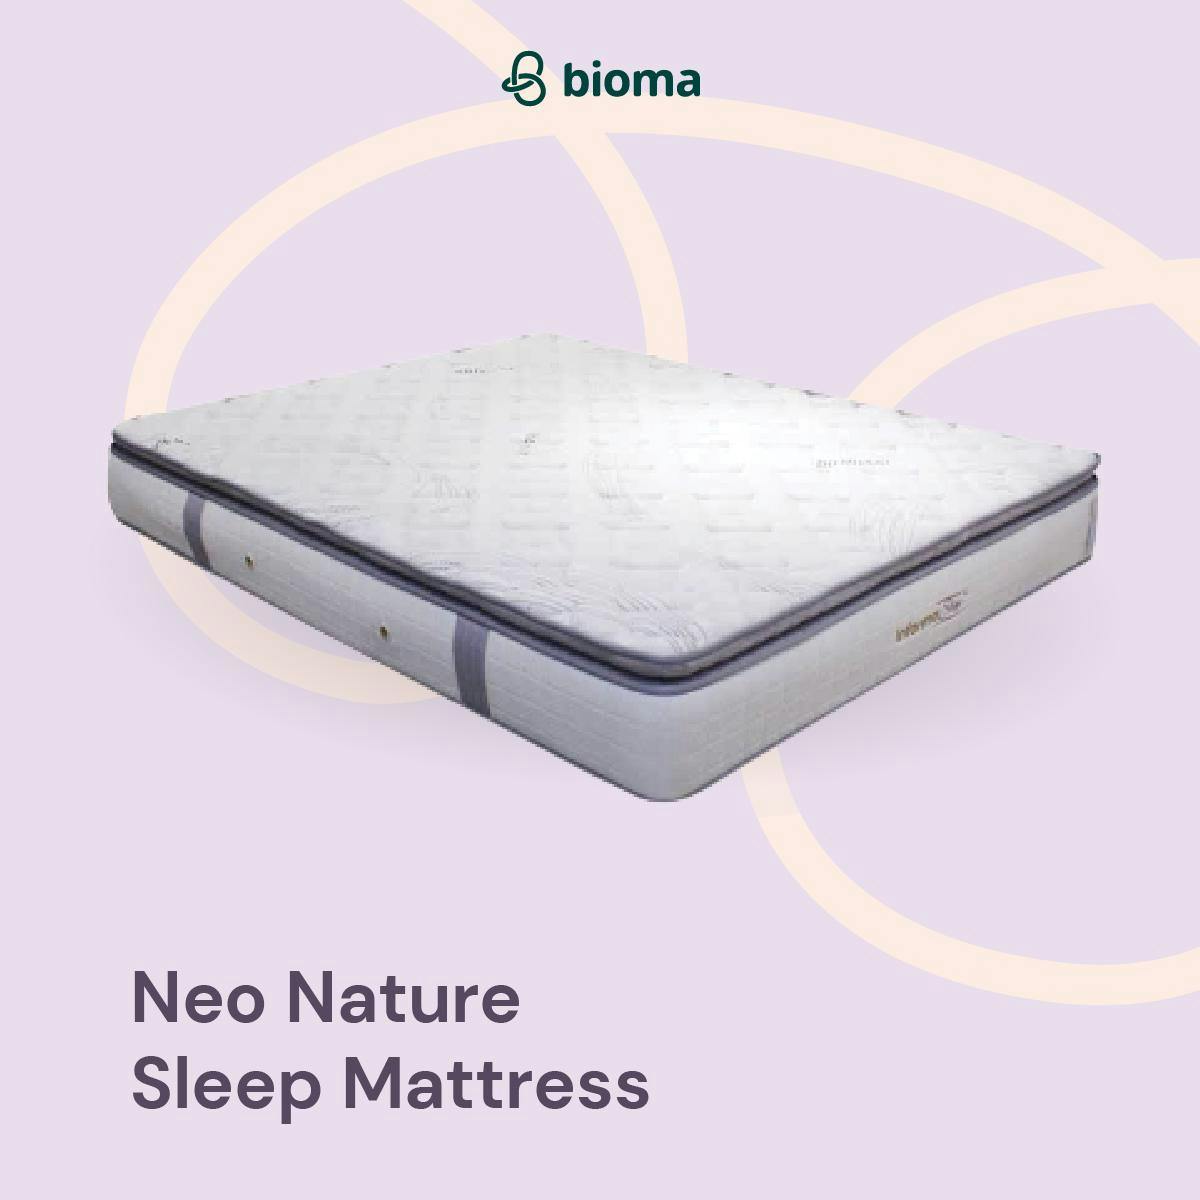 Neo Nature Sleep Mattress